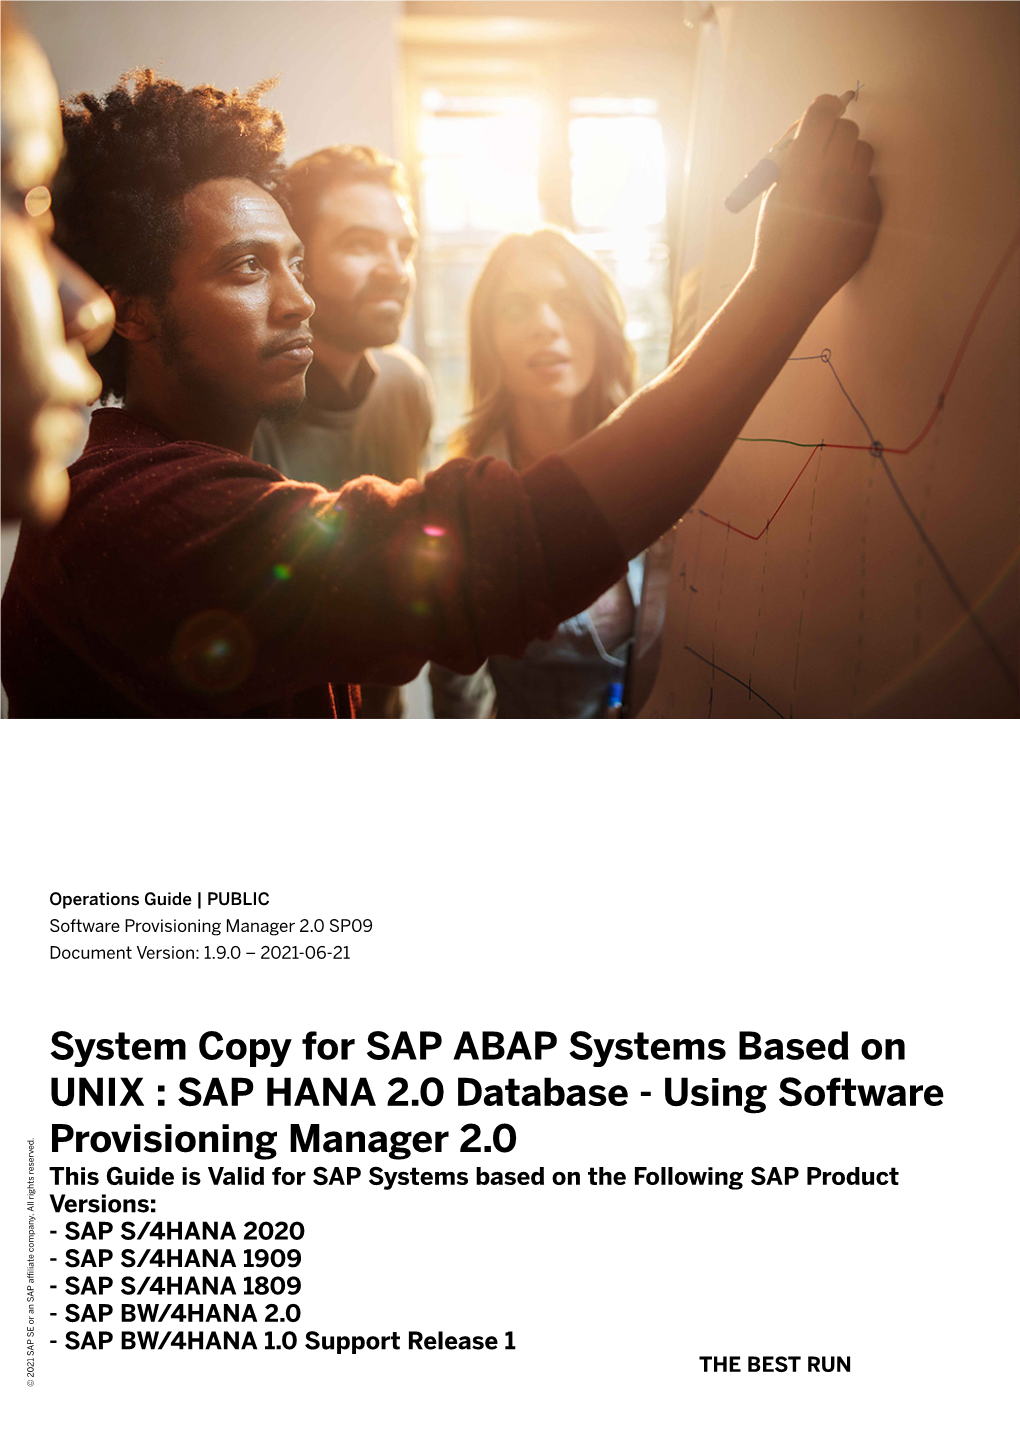 System Copy for SAP ABAP Systems Based on UNIX : SAP HANA 2.0